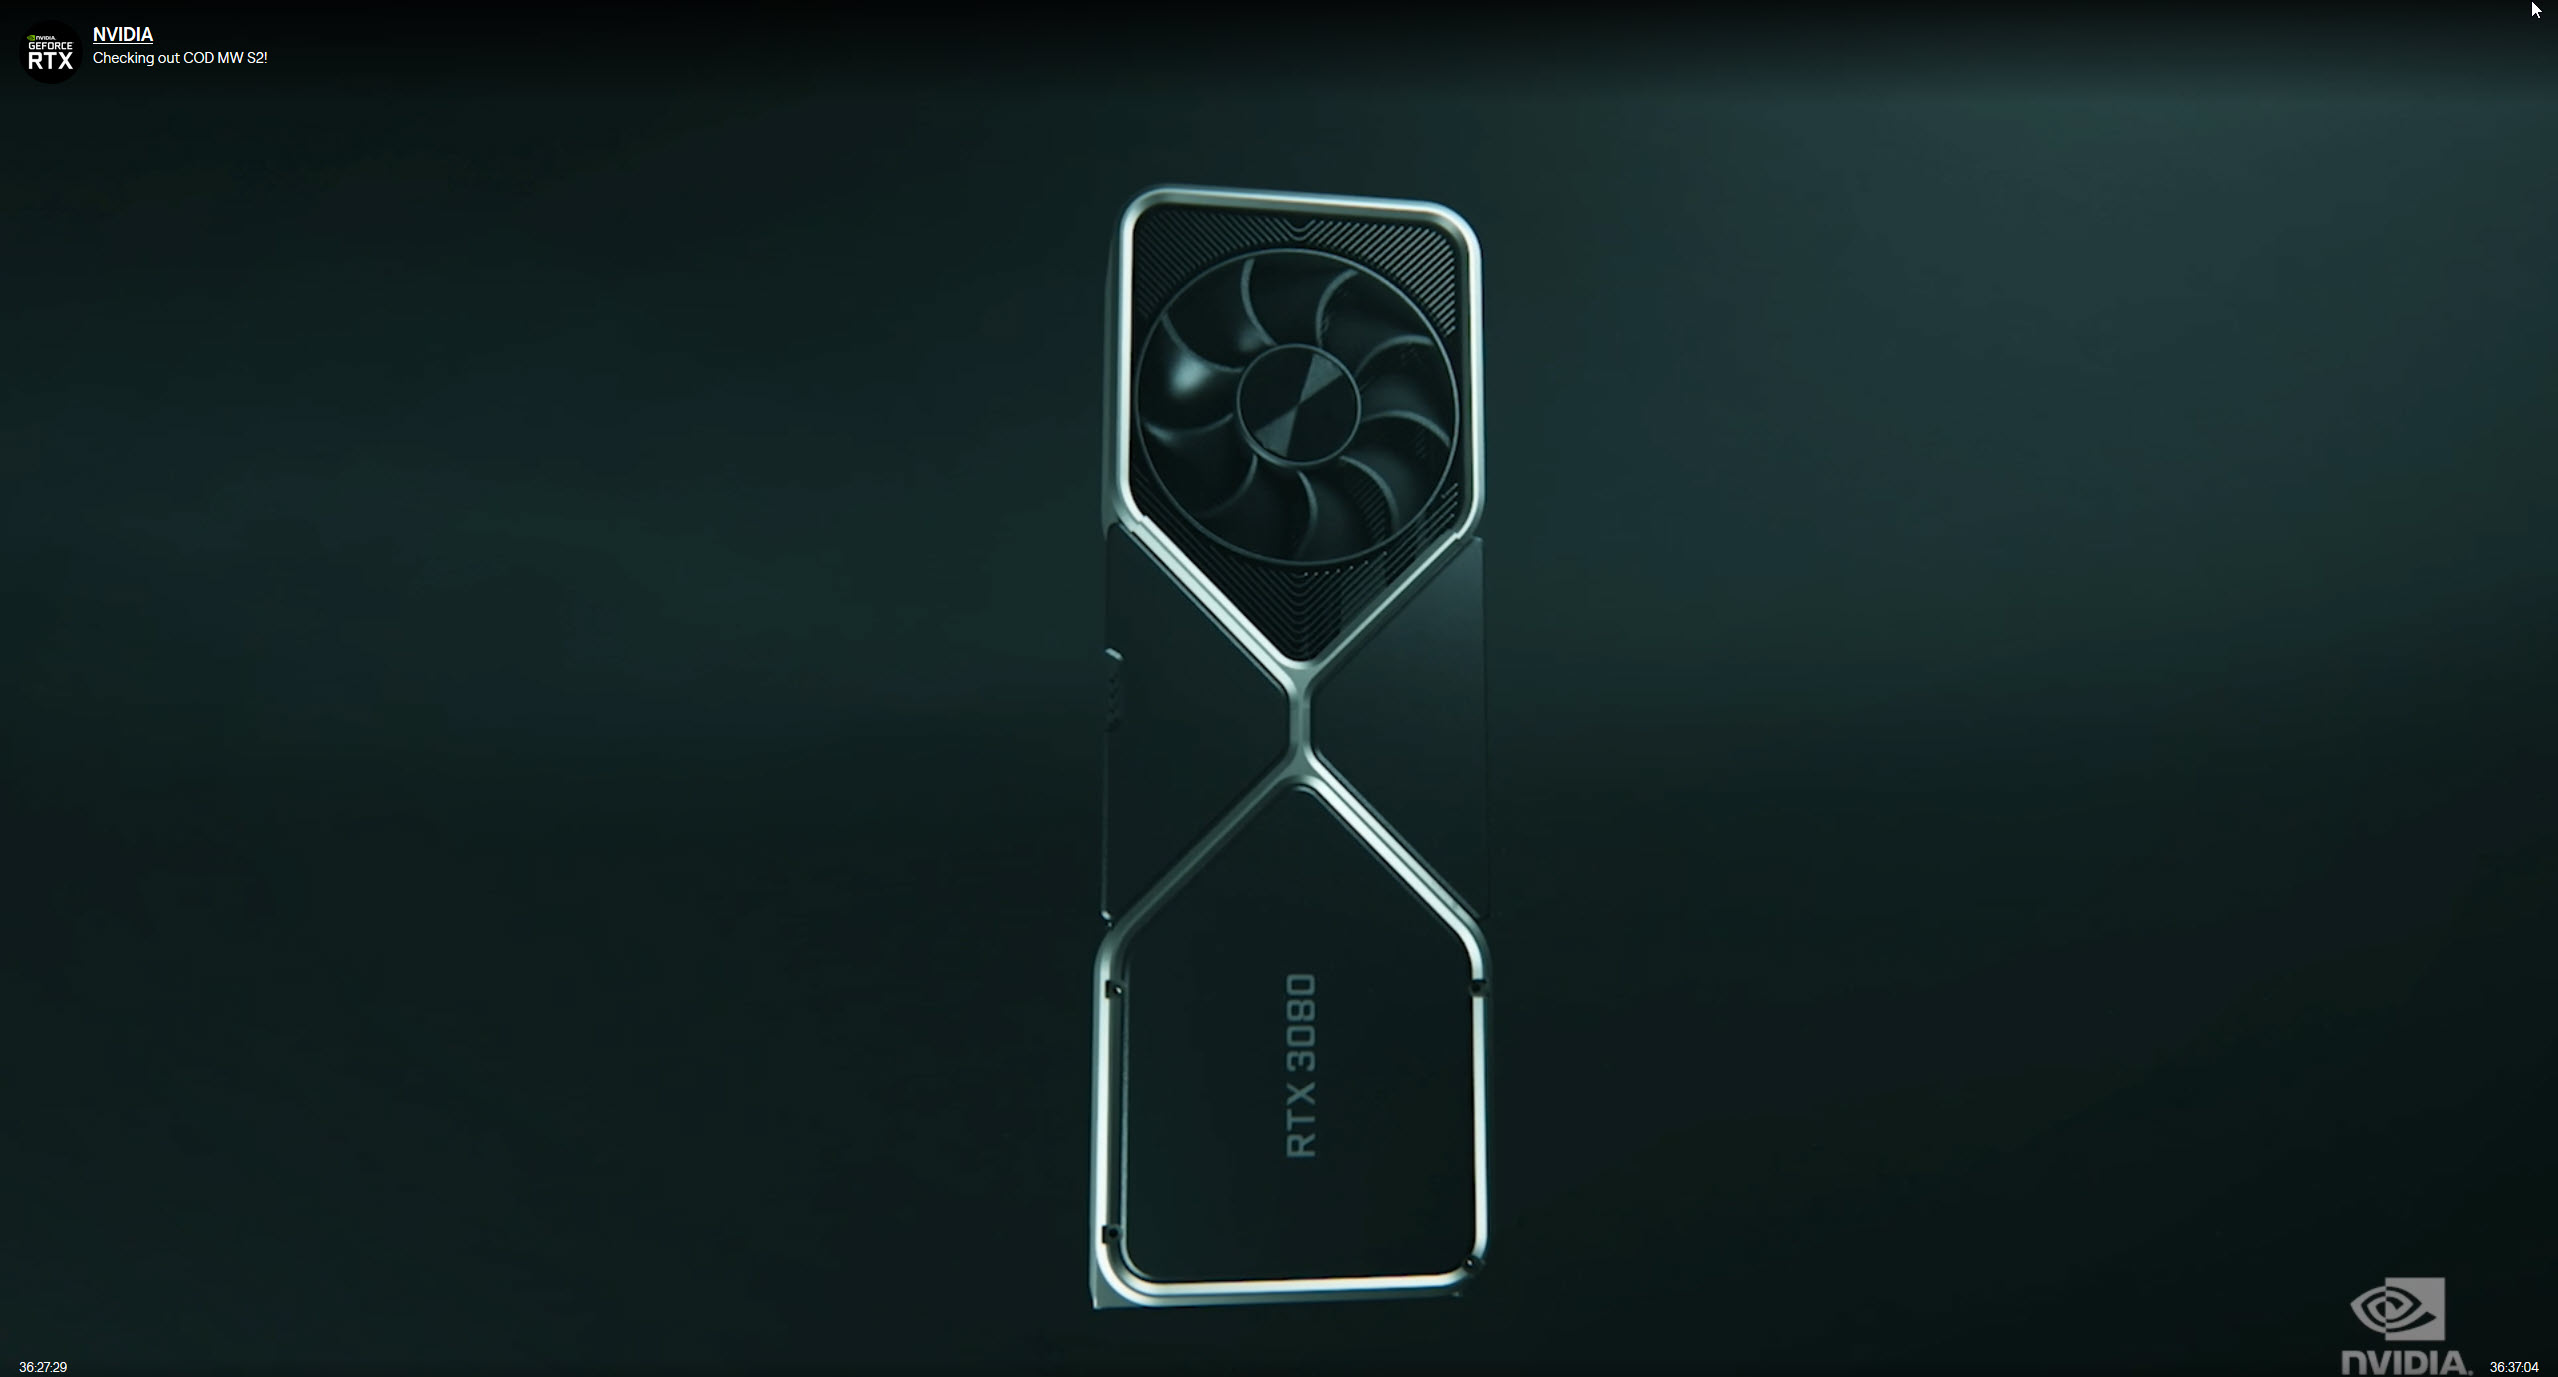 2020 09 01 23 46 58 Nvidia ประกาศเปิดตัวการ์ดจอ Nvidia GeForce RTX 30ซีรี่ย์รุ่นใหม่ล่าสุดสถาปัตย์ Ampere อย่างเป็นทางการ 